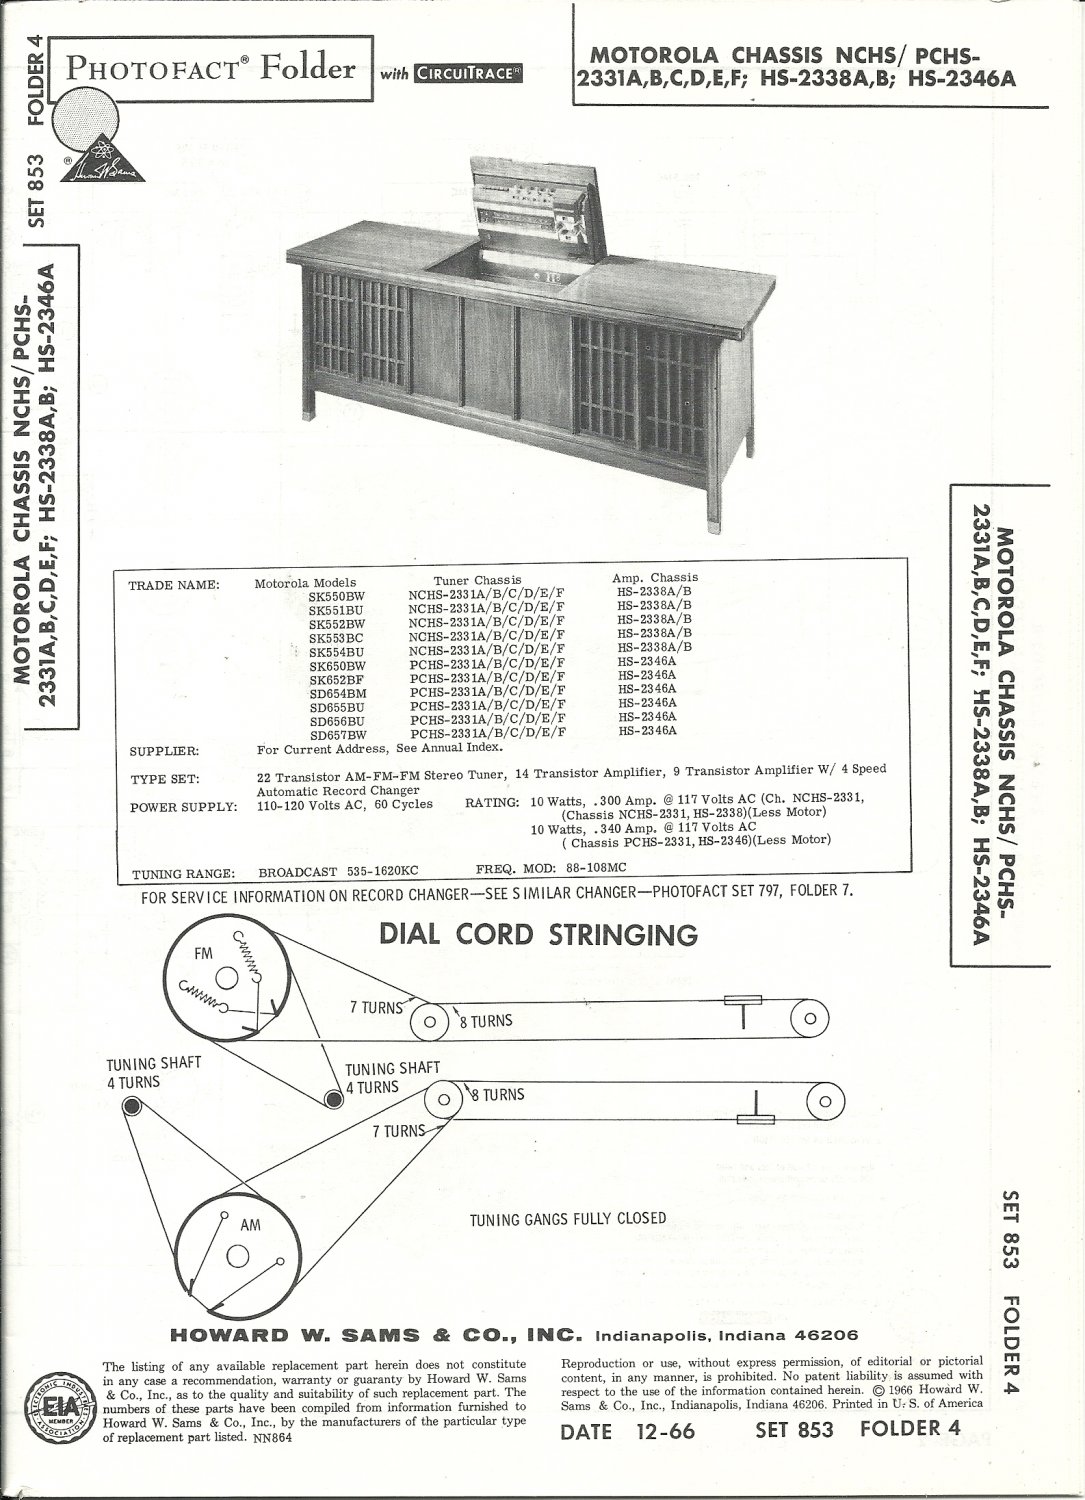 SAMS Photofact - Set 853 - Folder 4 - Dec 1966 - MOTOROLA CHASSIS NCHS/ PCHS